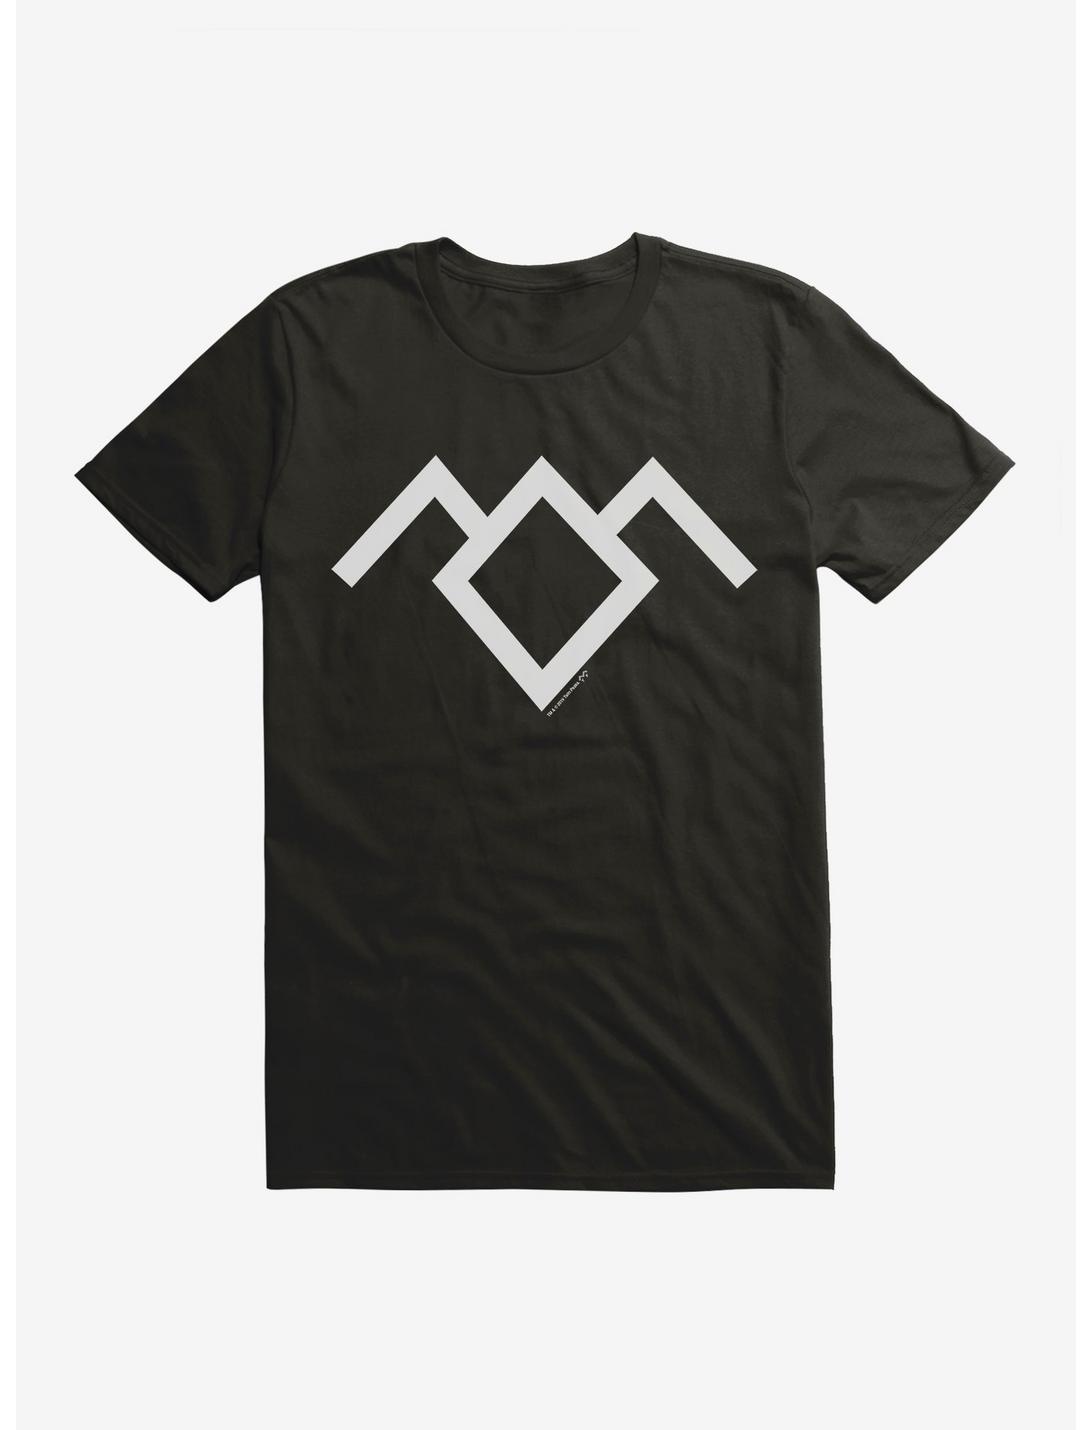 Twin Peaks Black Lodge Icon T-Shirt, BLACK, hi-res